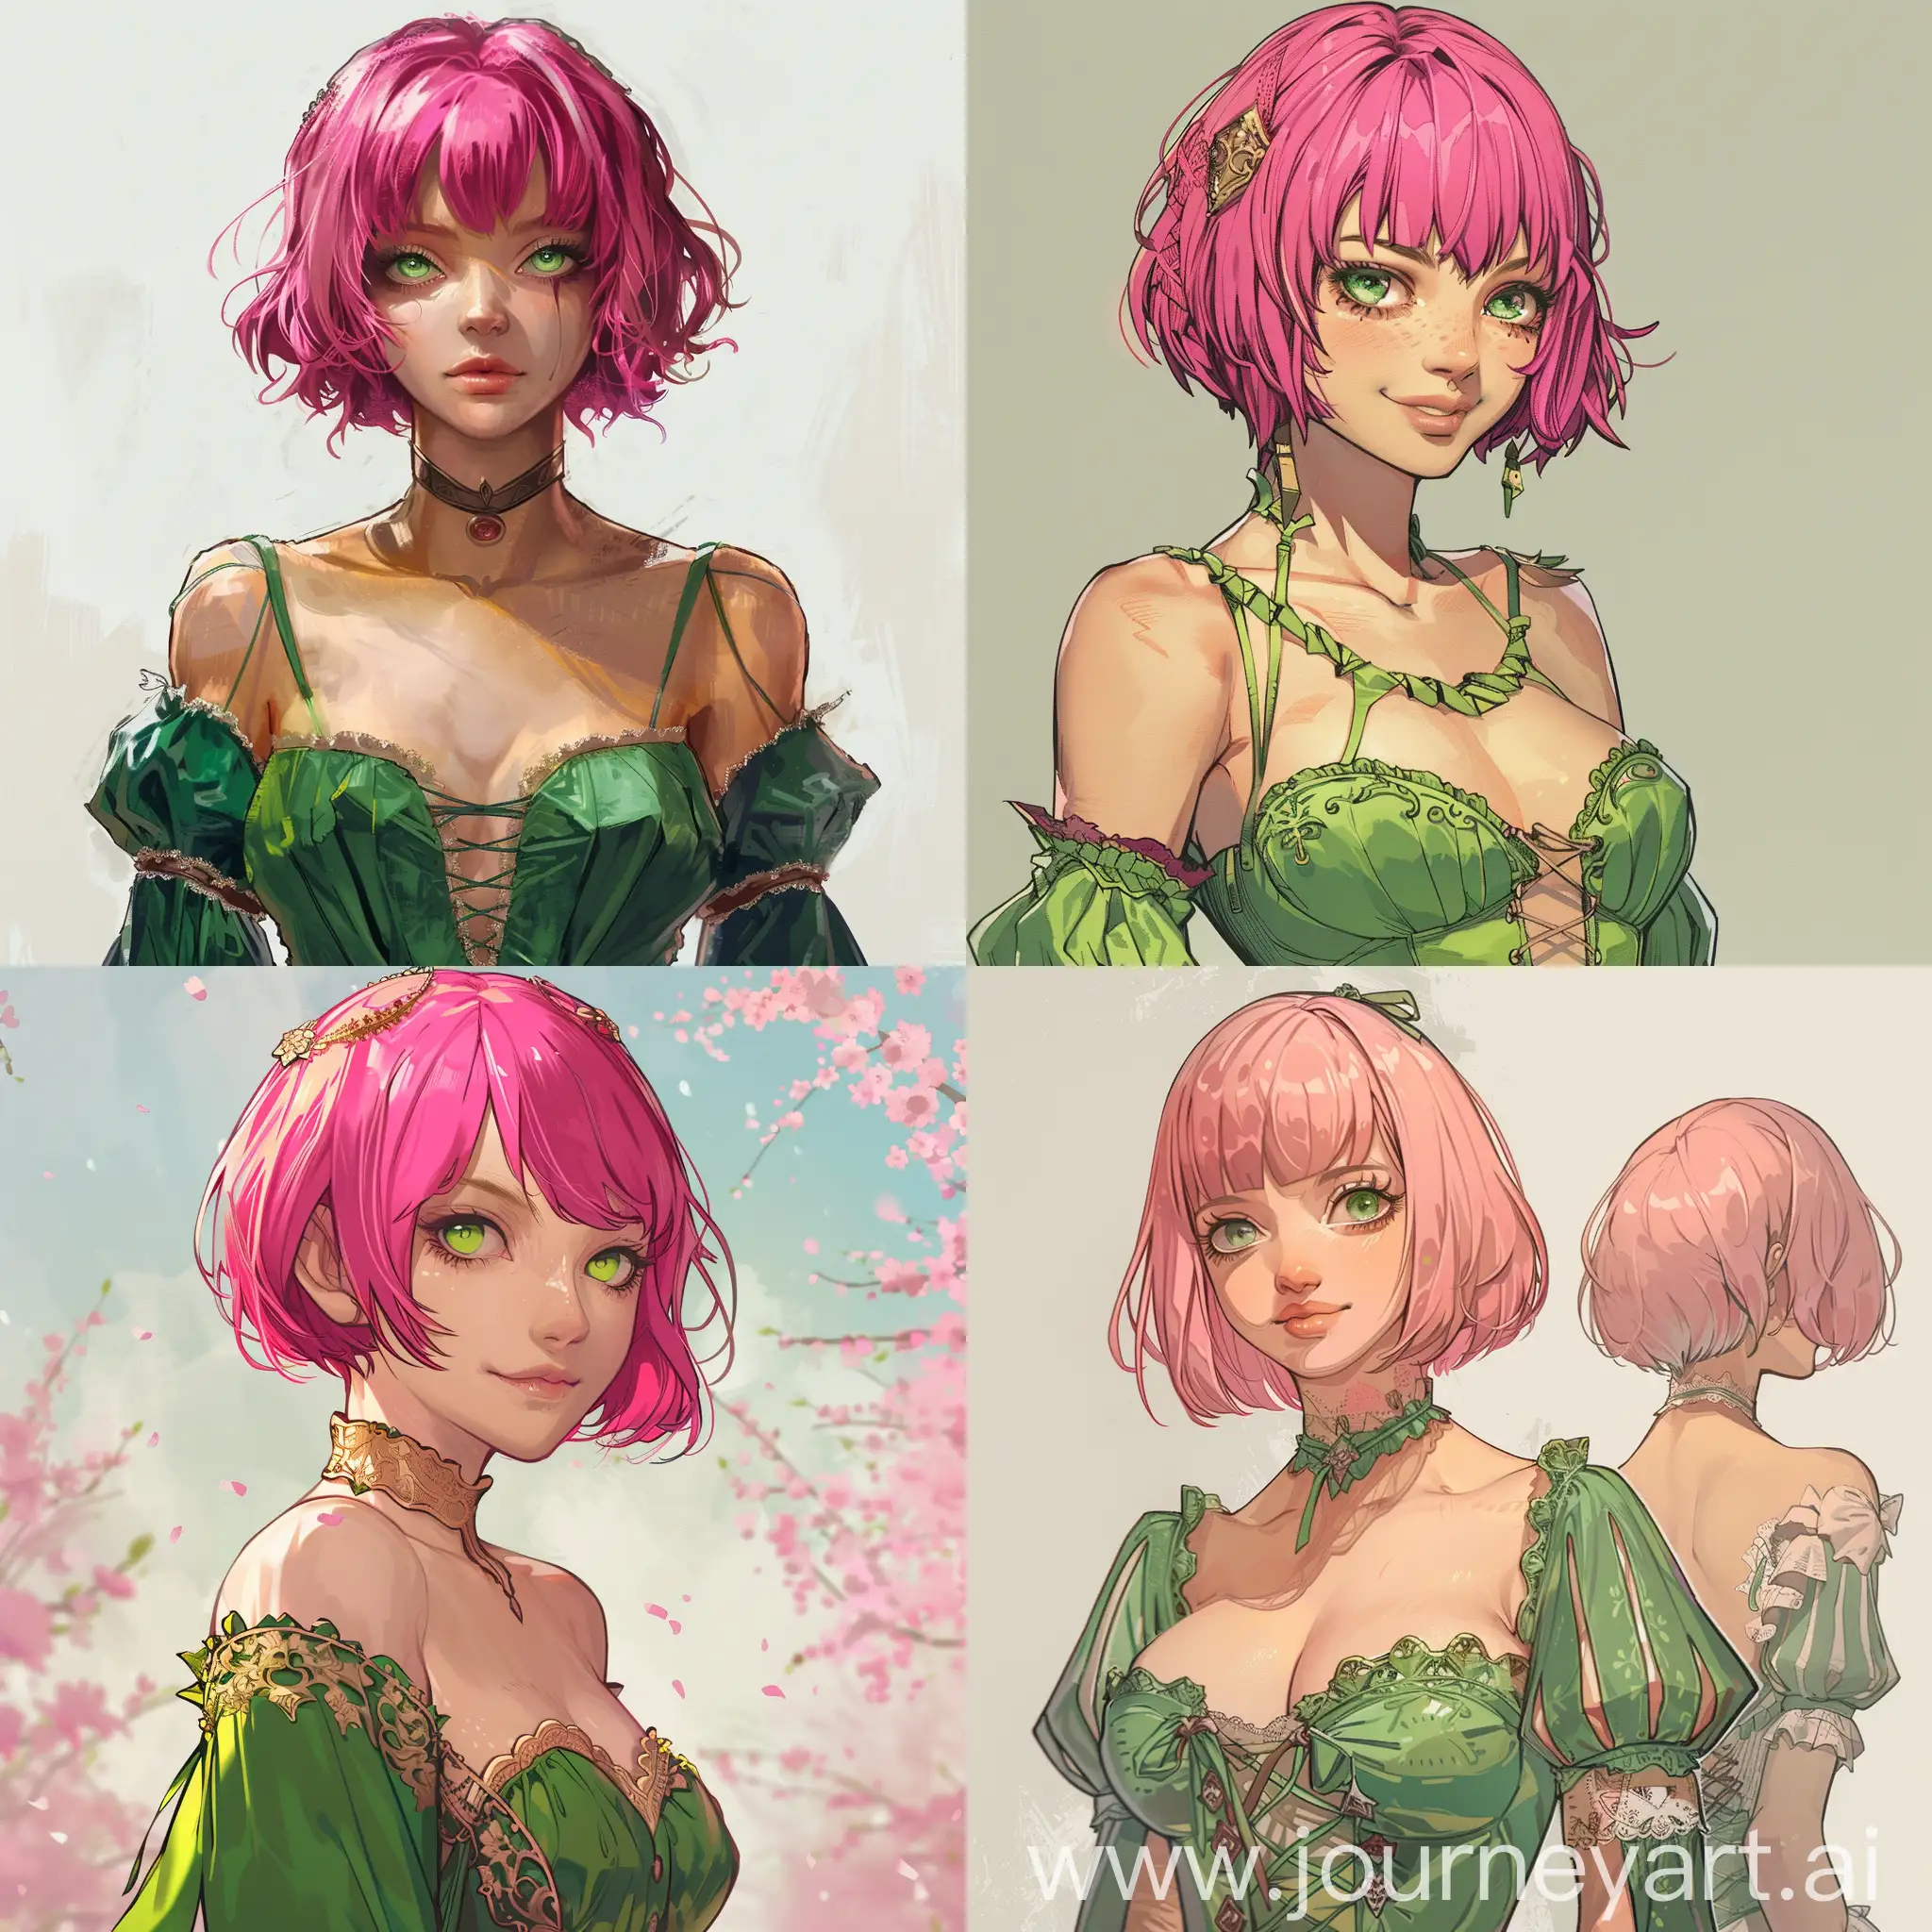 pink hair , short hair , bangs, green eyes , green dress, 1 girl , sakura , renaissance outfit